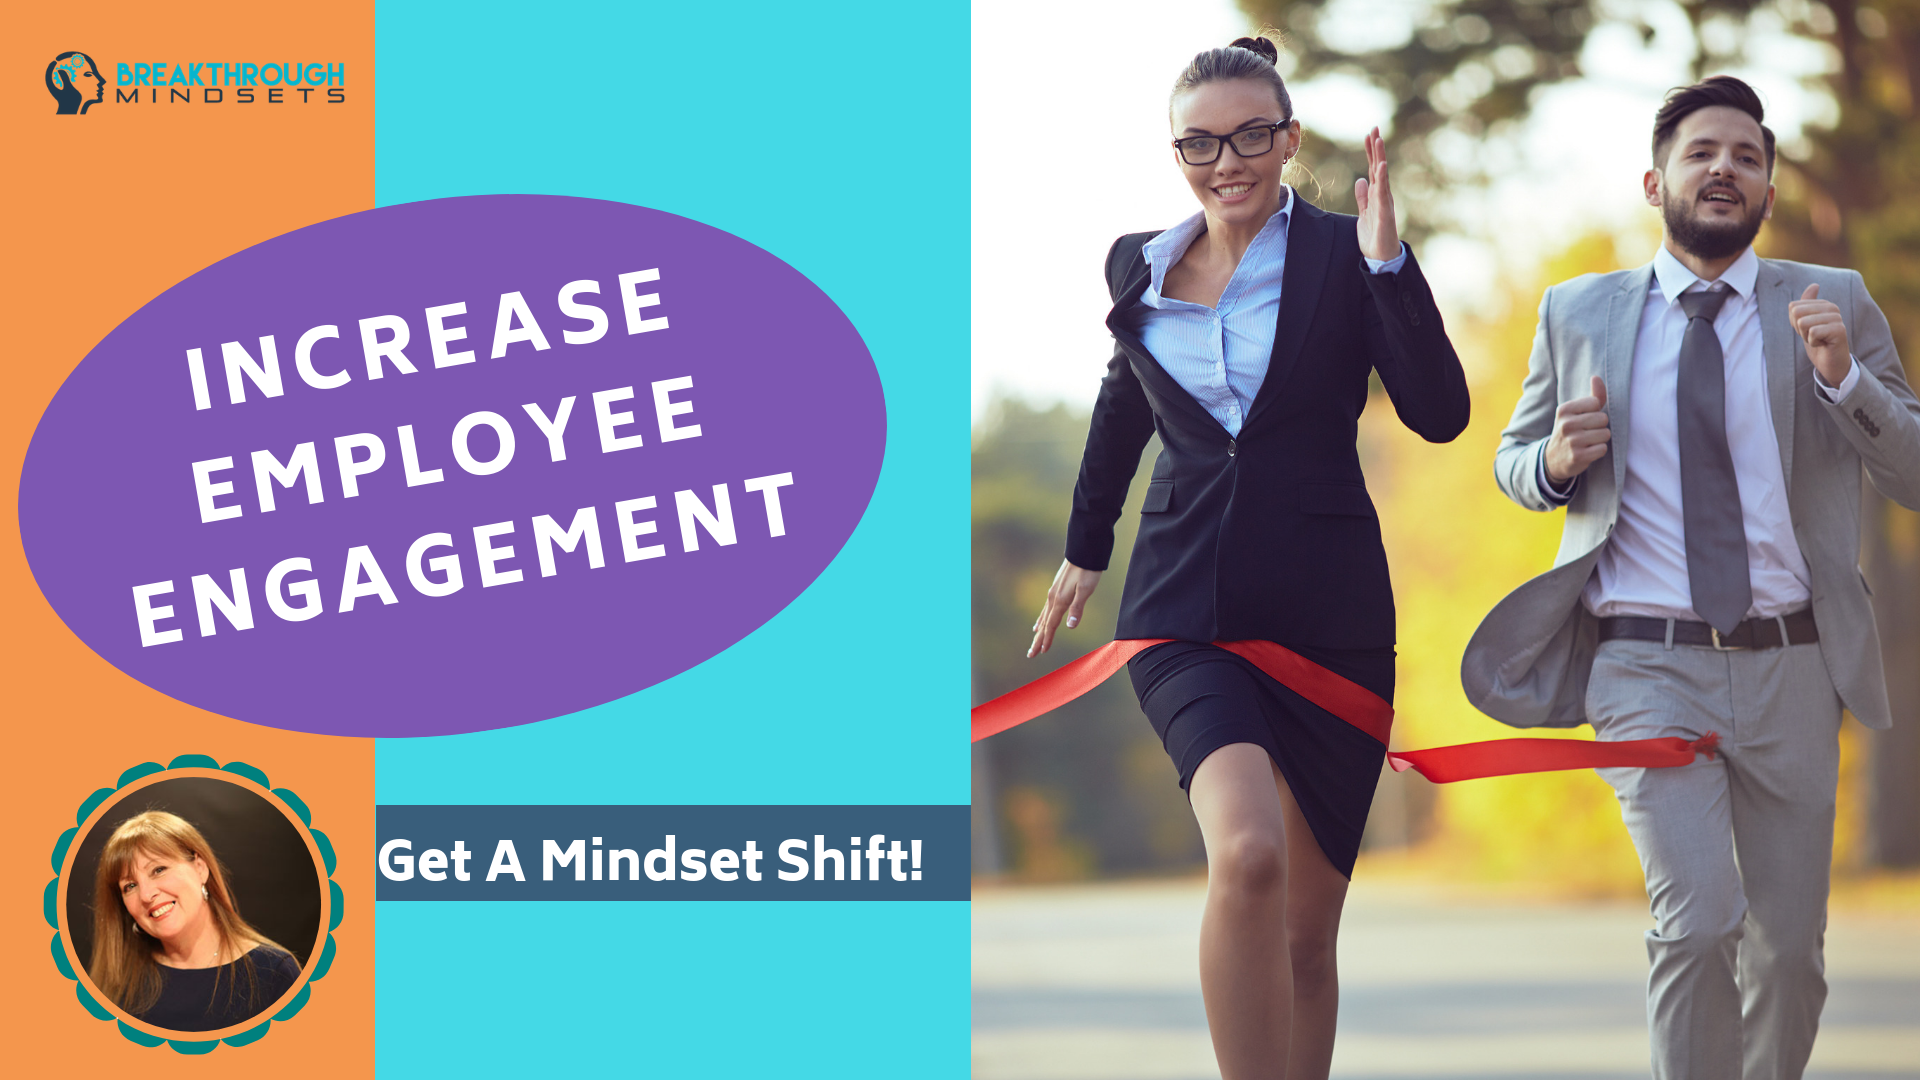 Employee engagement drives bottom-line results. - Breakthrough Mindsets